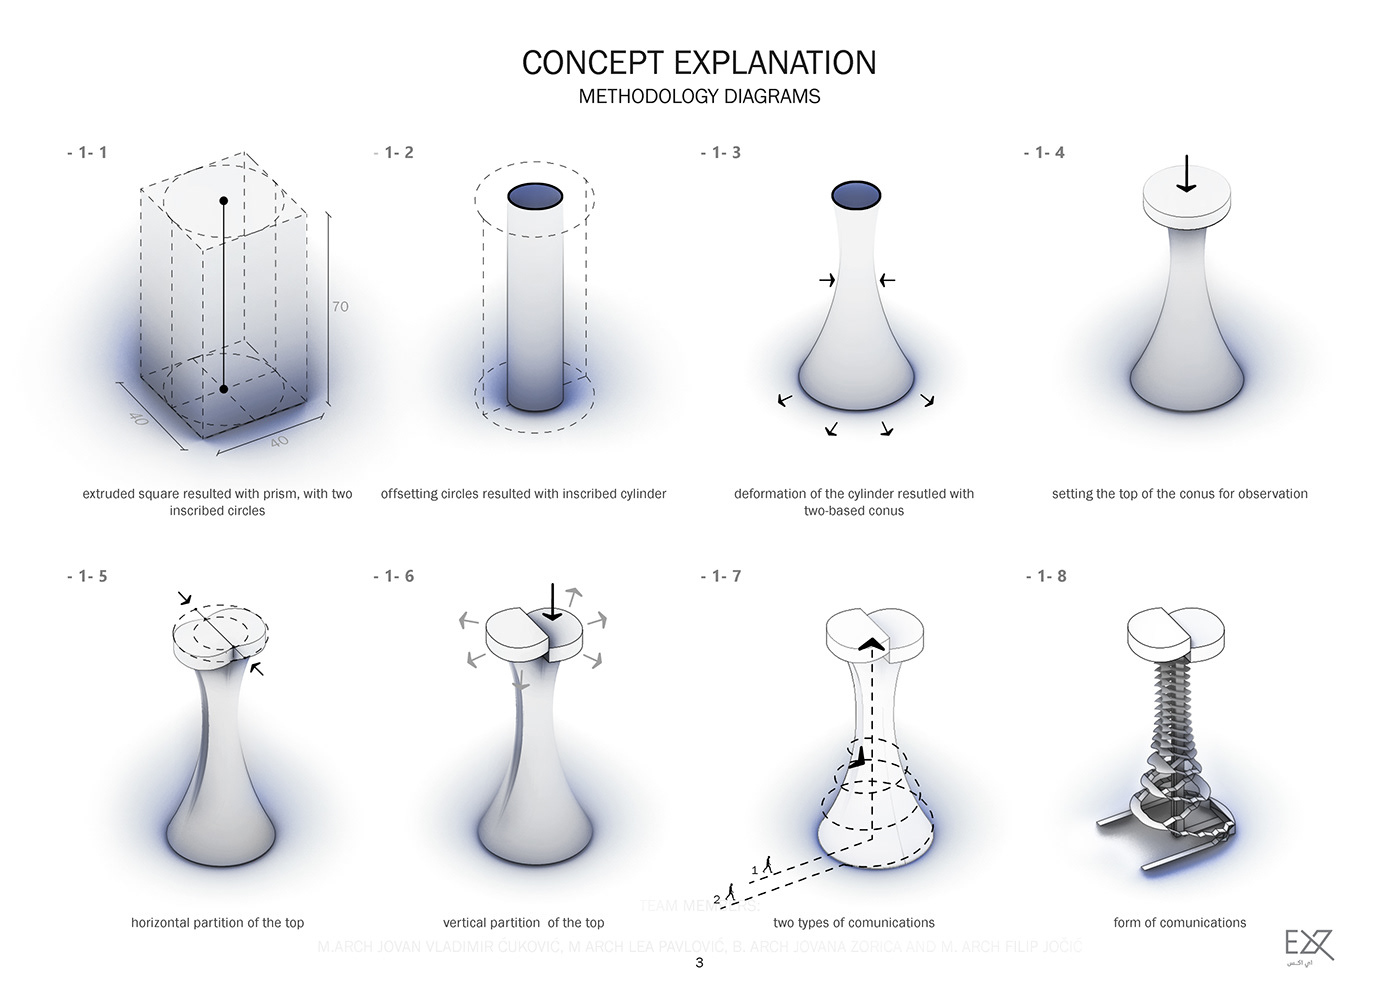 3D model architecture conceptual design architecture competition Render Observation Tower